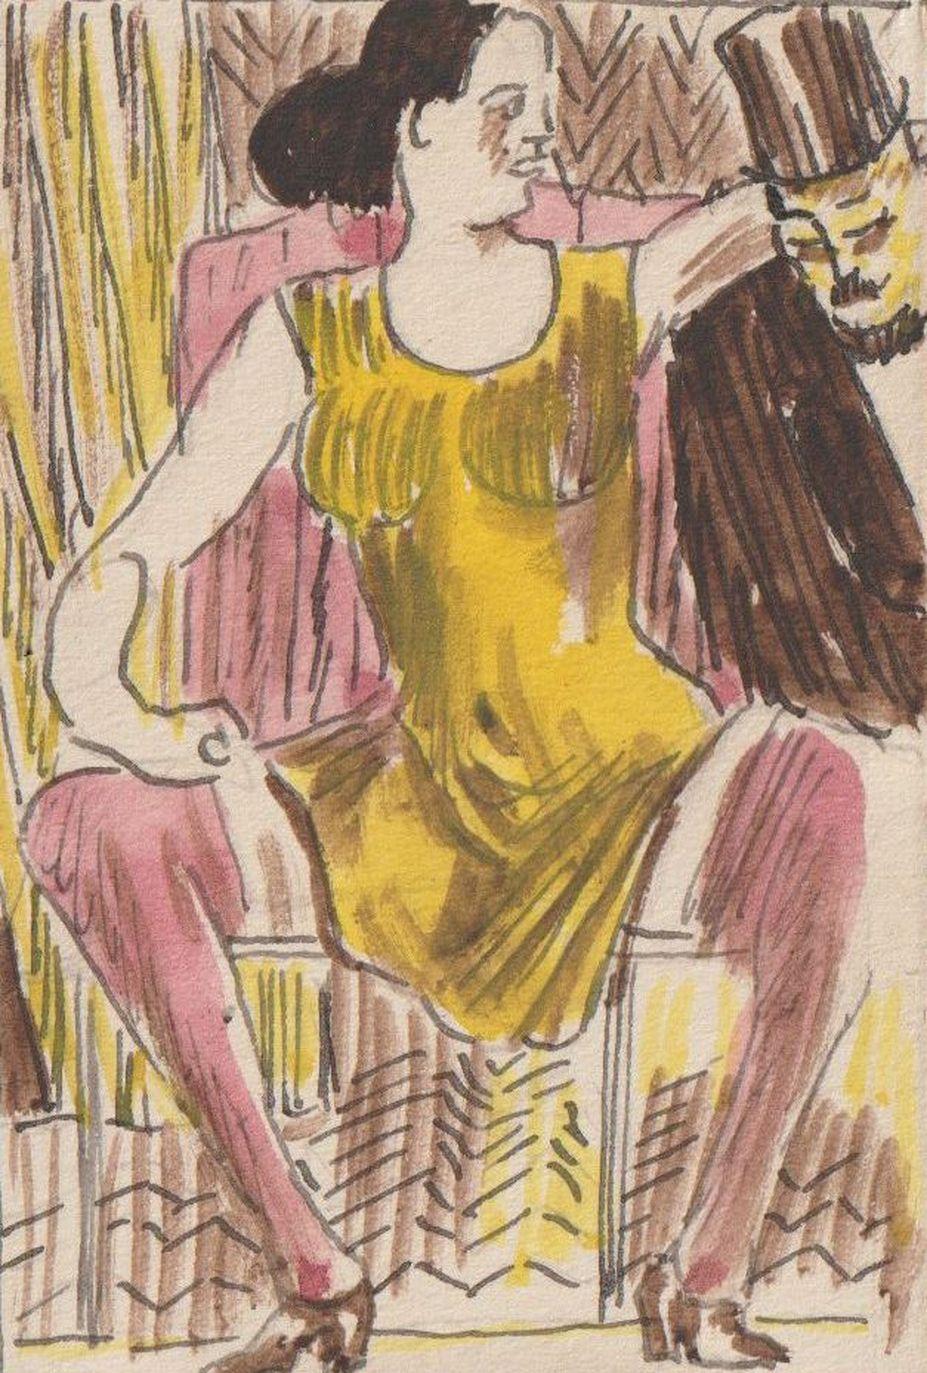 Adolfs Zardins Figurative Painting - Yellow dress. Paper, mixed media, 8x5.5 cm